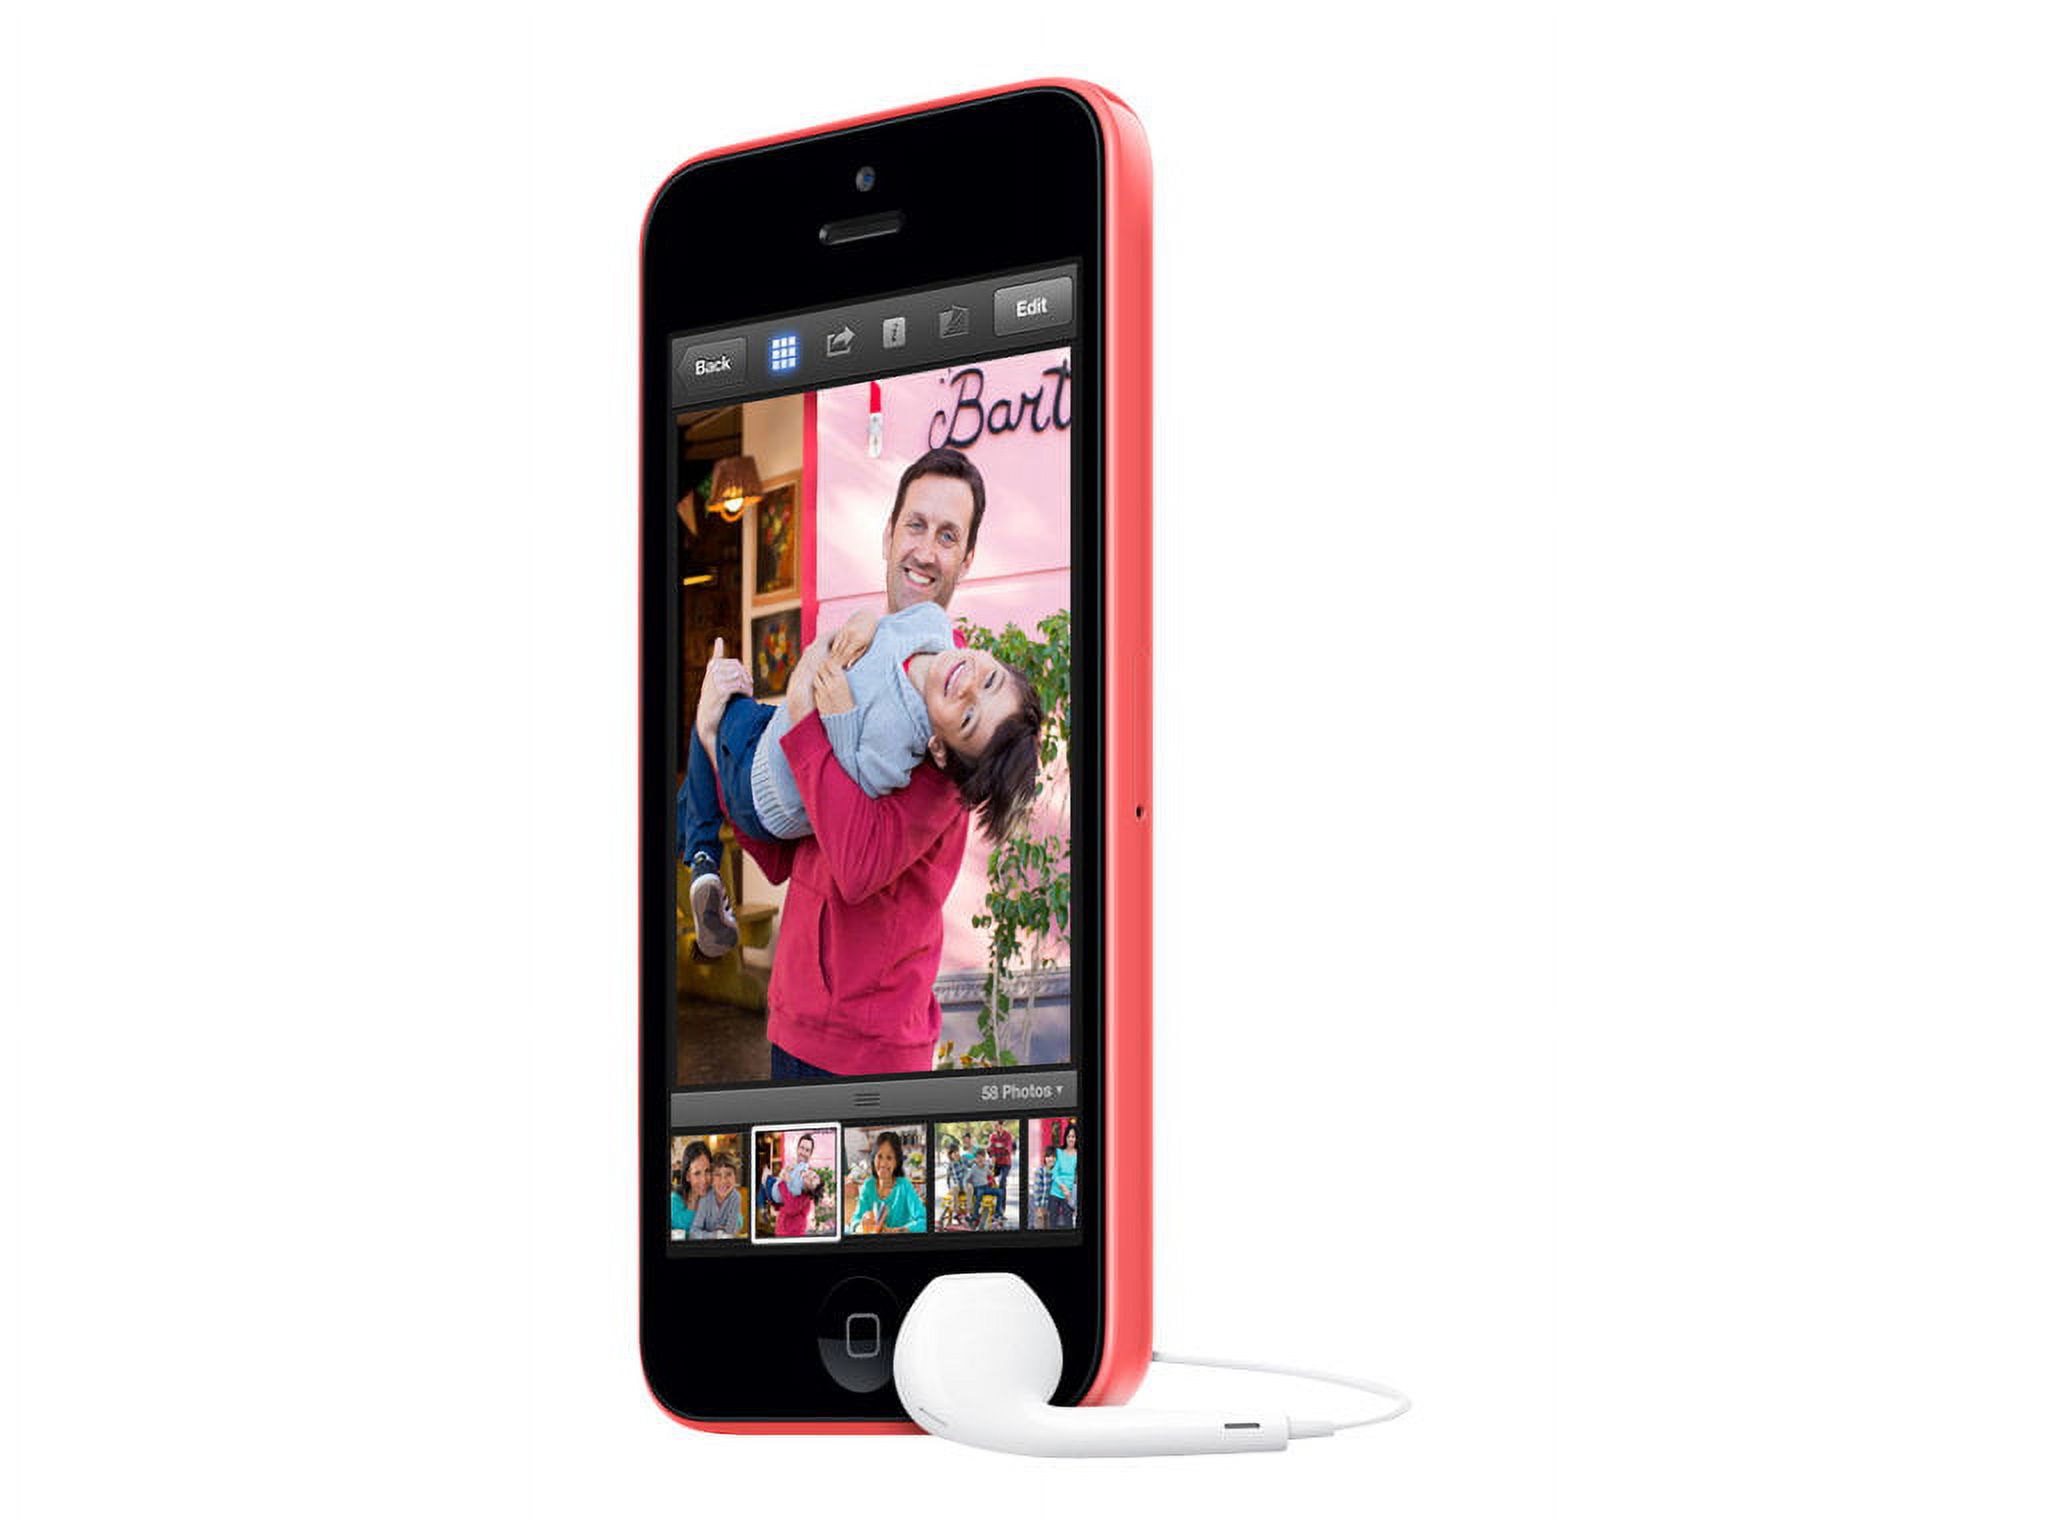 Restored Apple iPhone 5c 8GB, Pink - Unlocked (Refurbished) - image 2 of 8